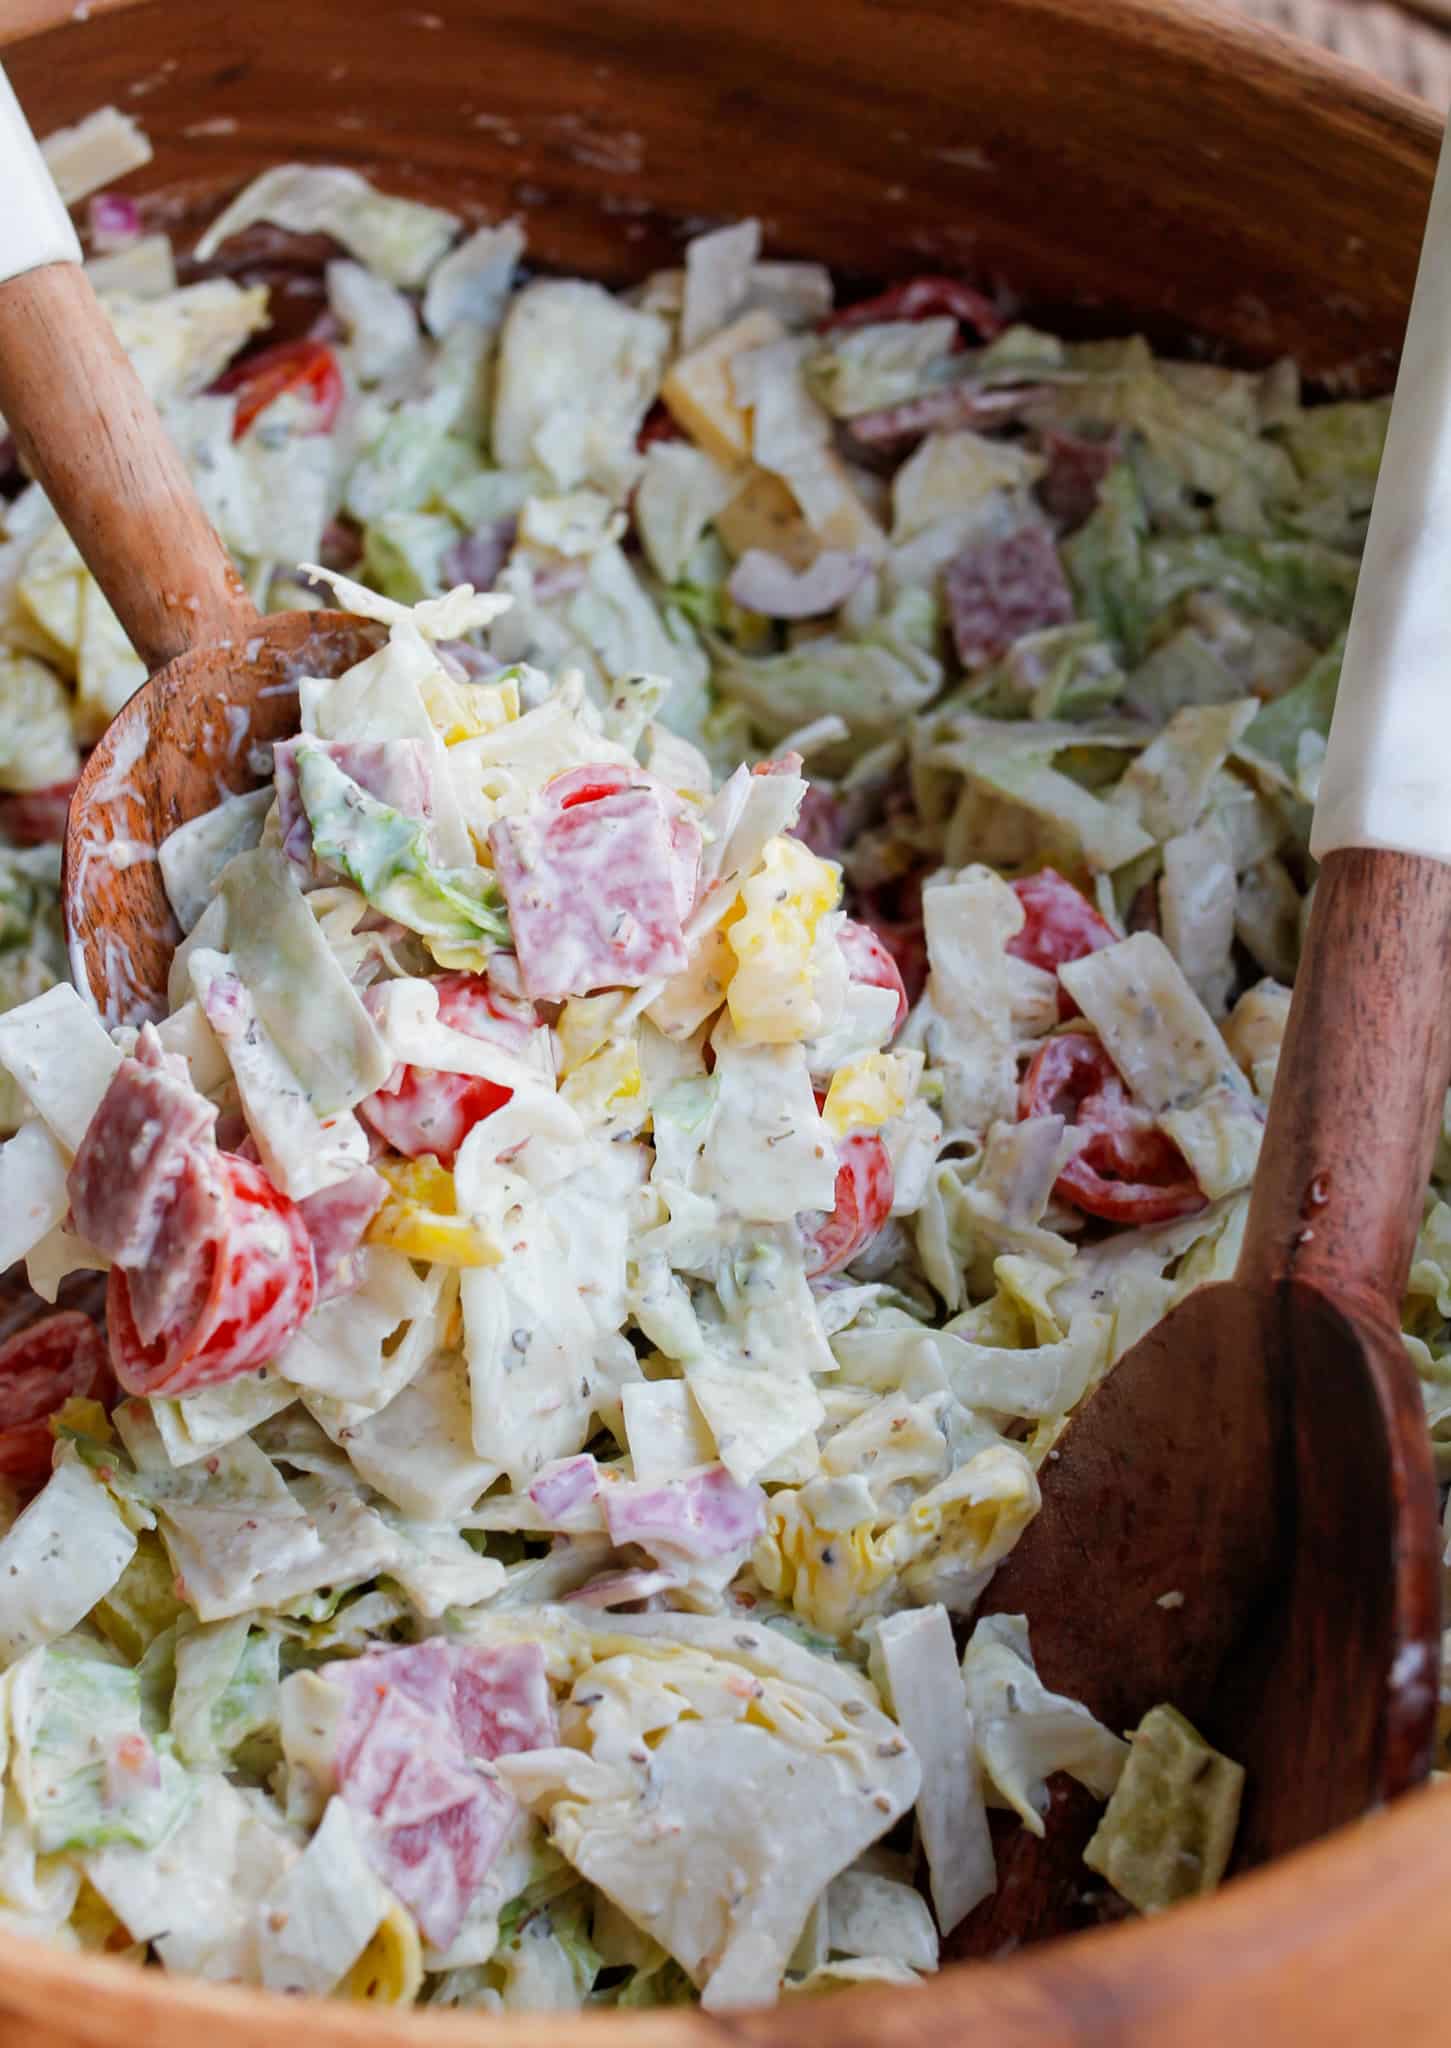 Italian Grinder Salad (Chopped Sub Salad) - Wellness by Kay